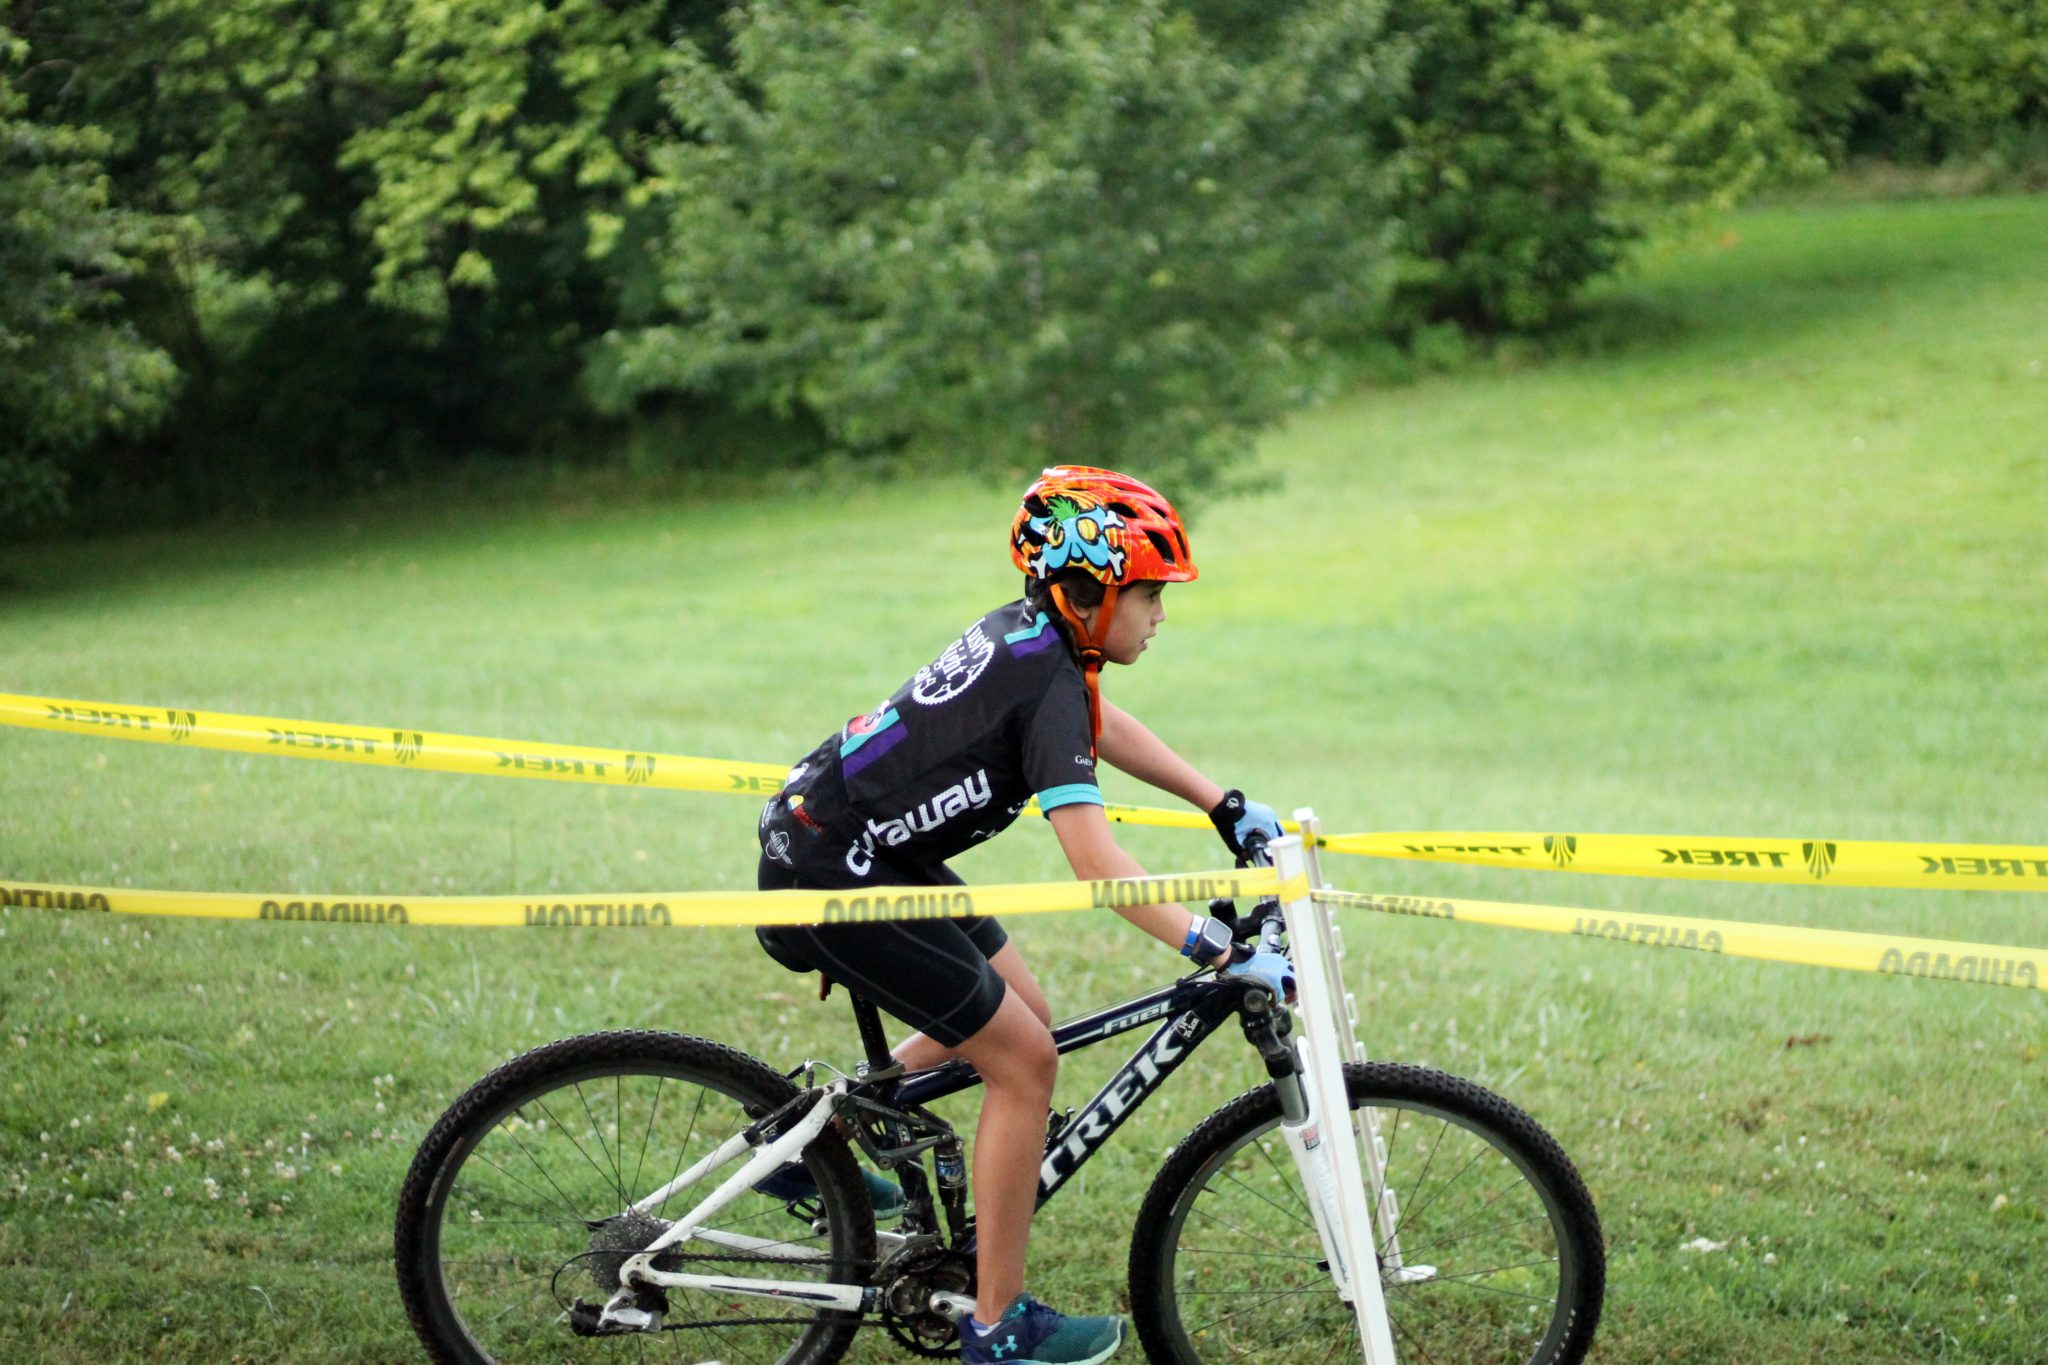 Fishburn youth mountain biker rides around a turn